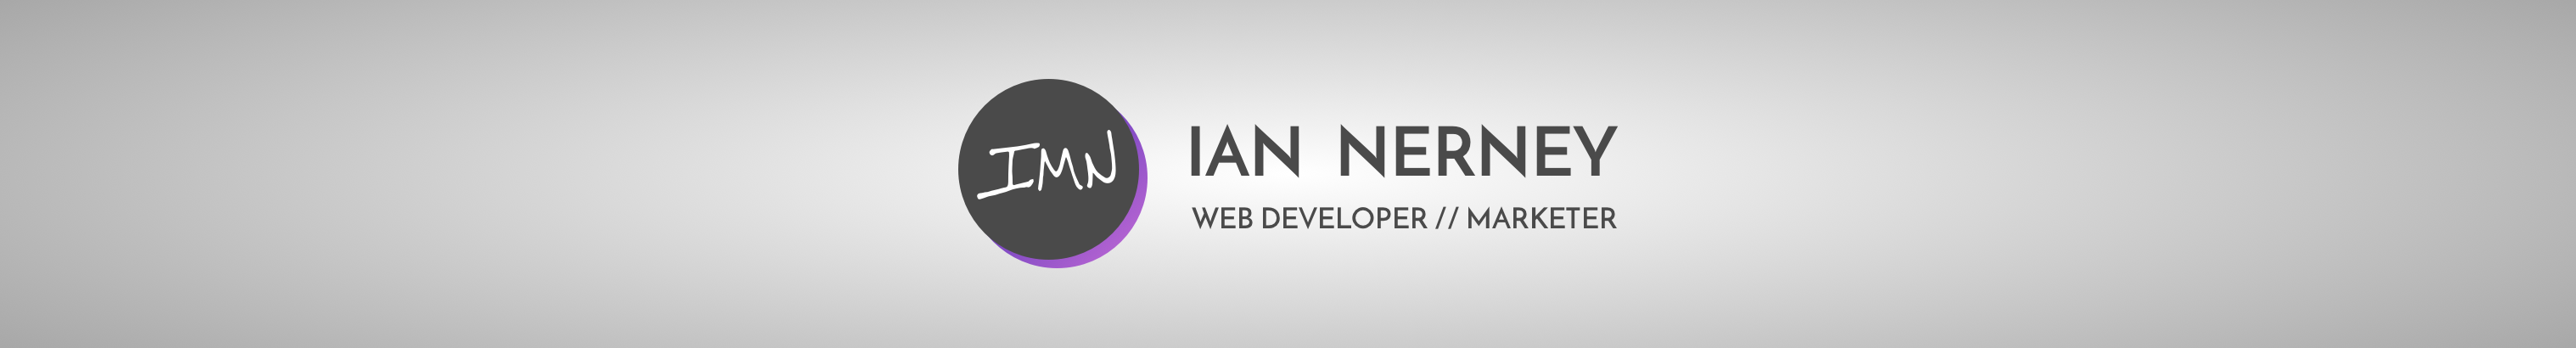 Ian Nerney のプロファイルバナー